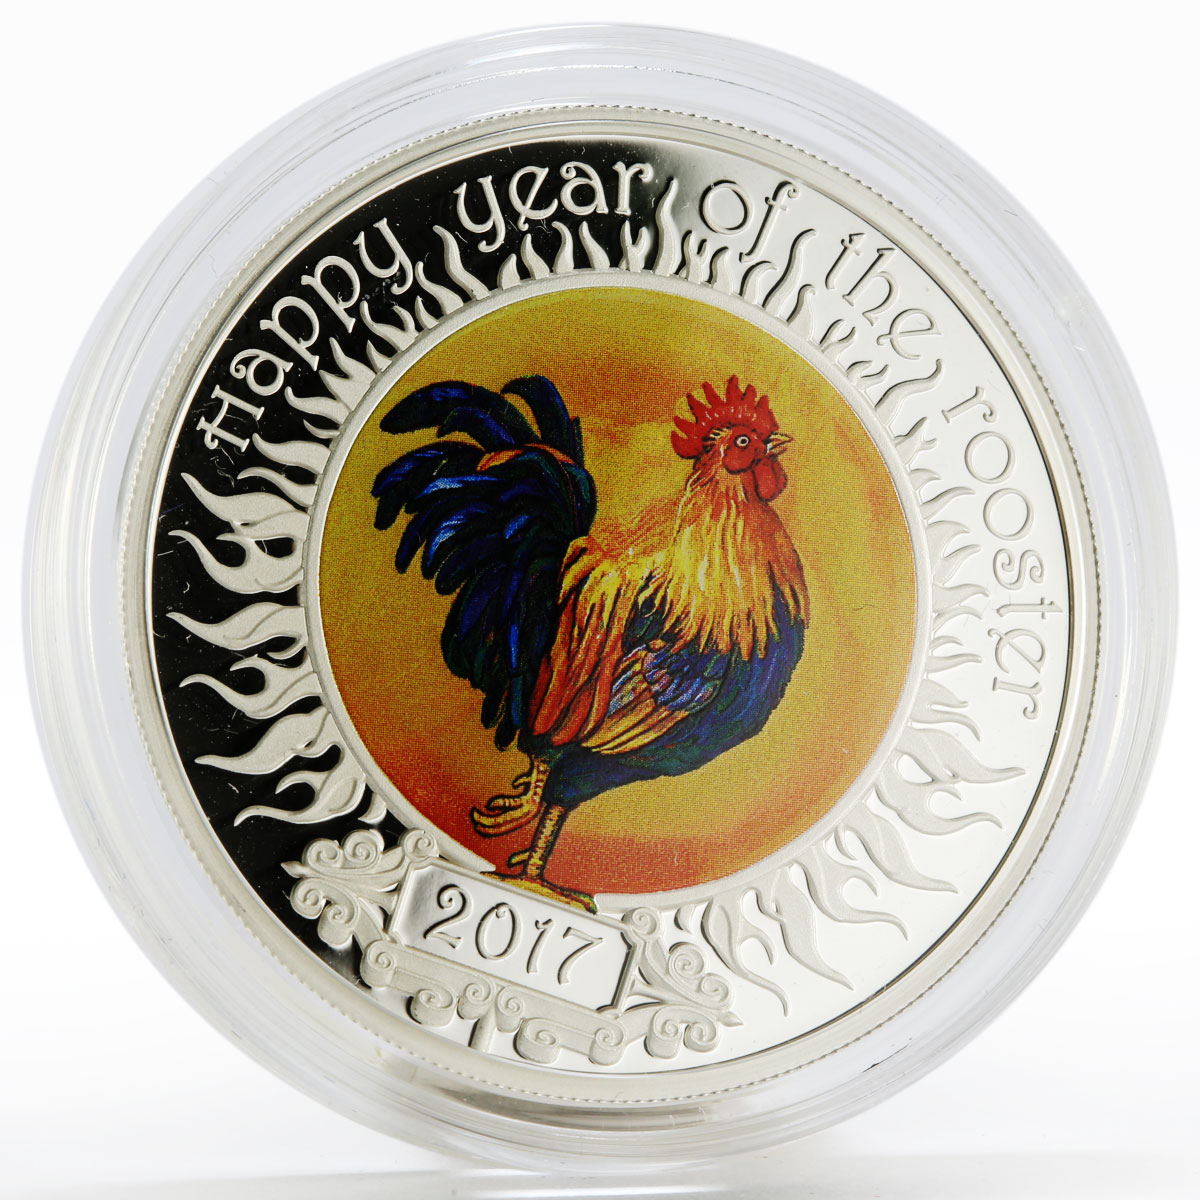 Macedonia 100 denars Lunar Calendar series Wind Spinner Rooster silver coin 2017